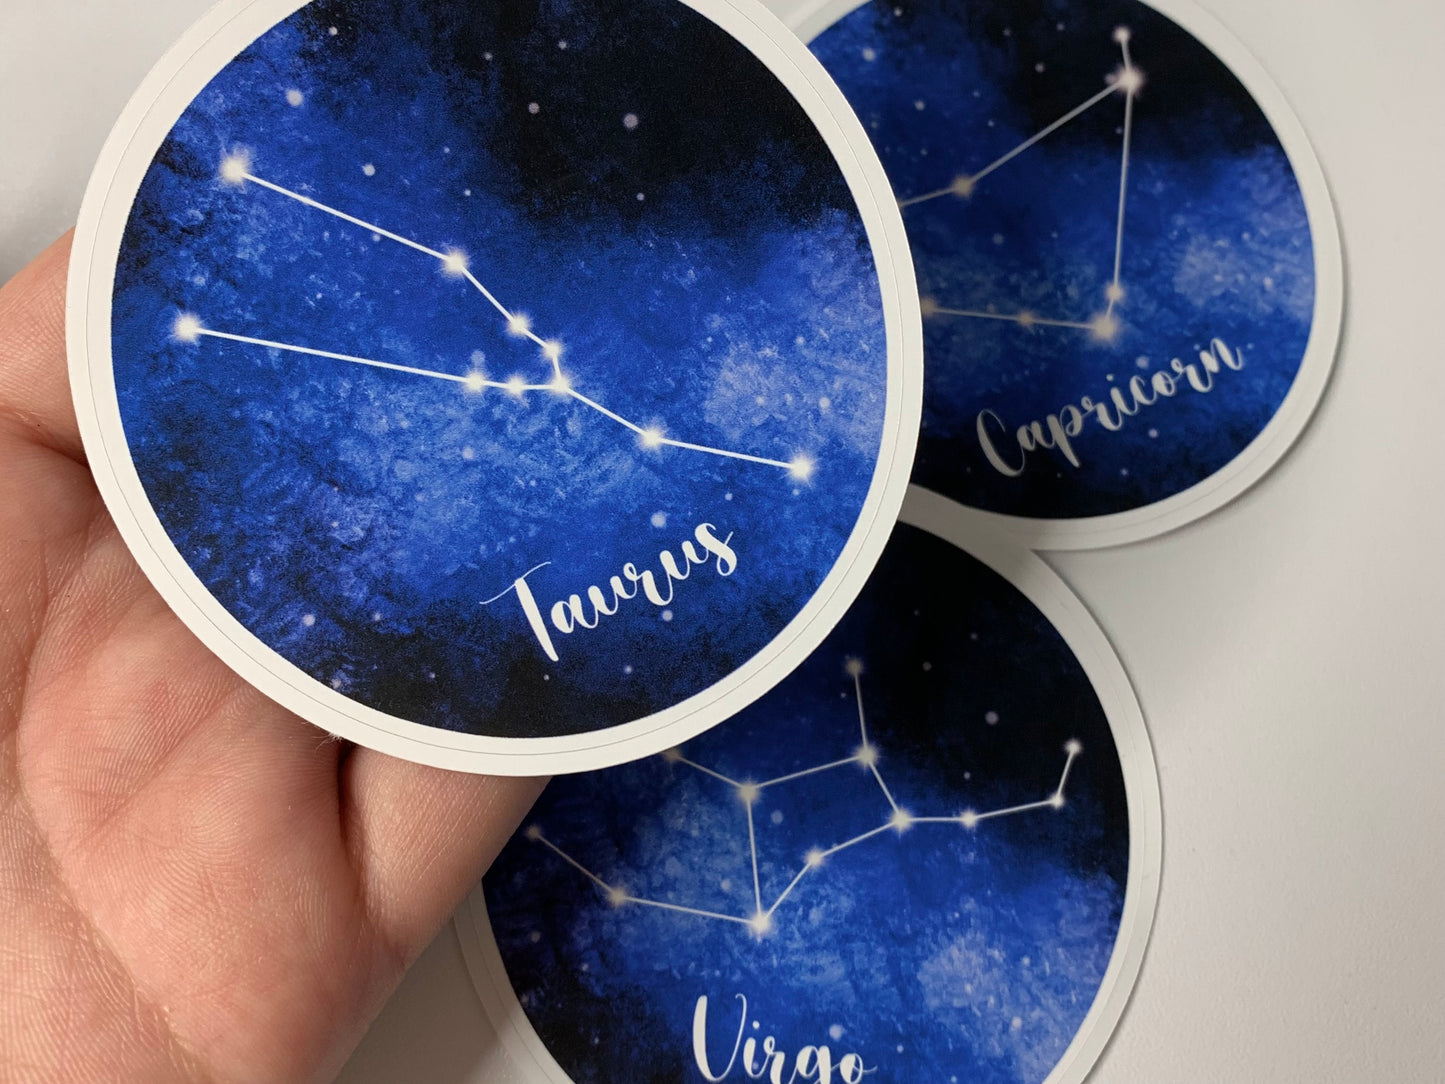 Capricorn Zodiac Constellation Sticker